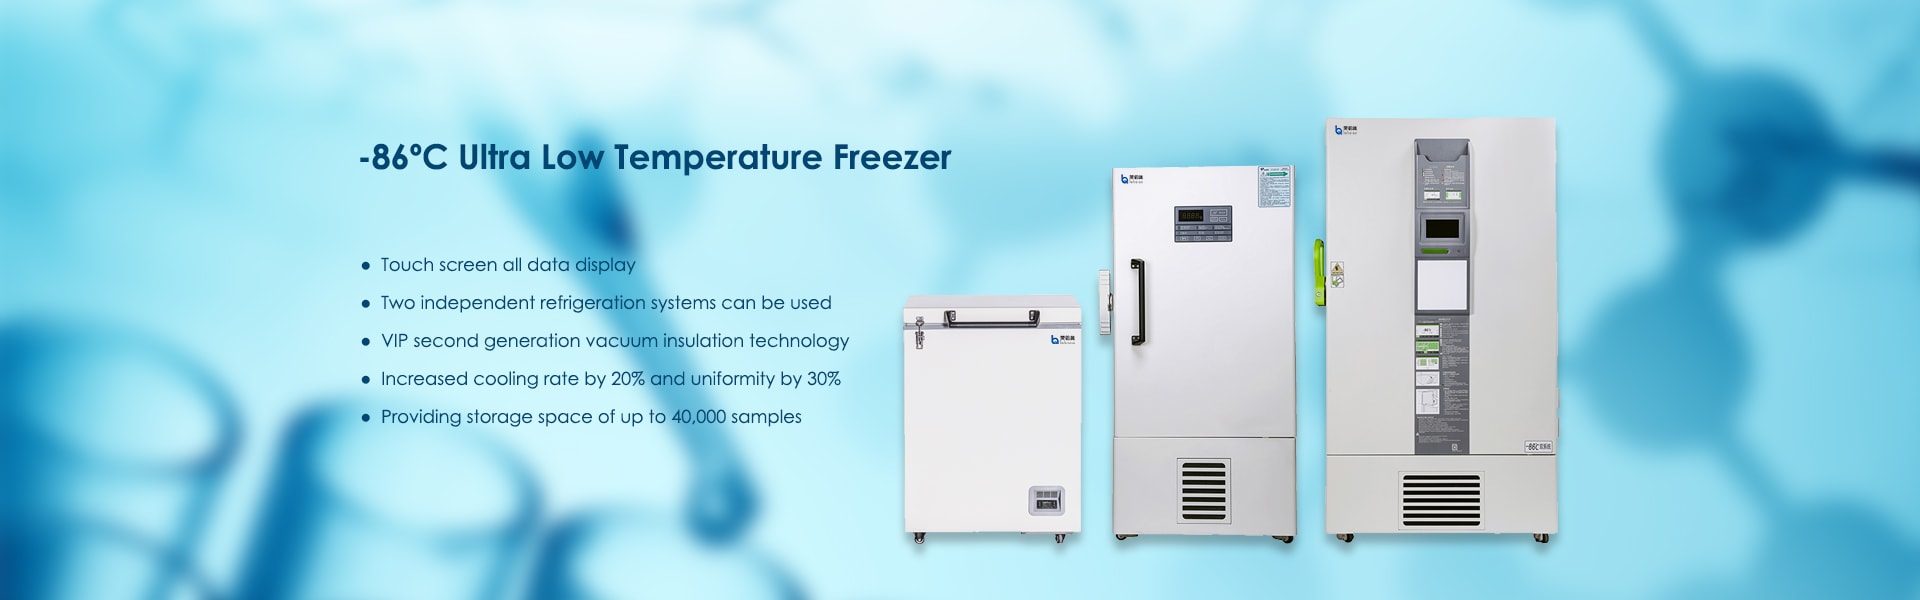 banner of ultra low temperature freezer